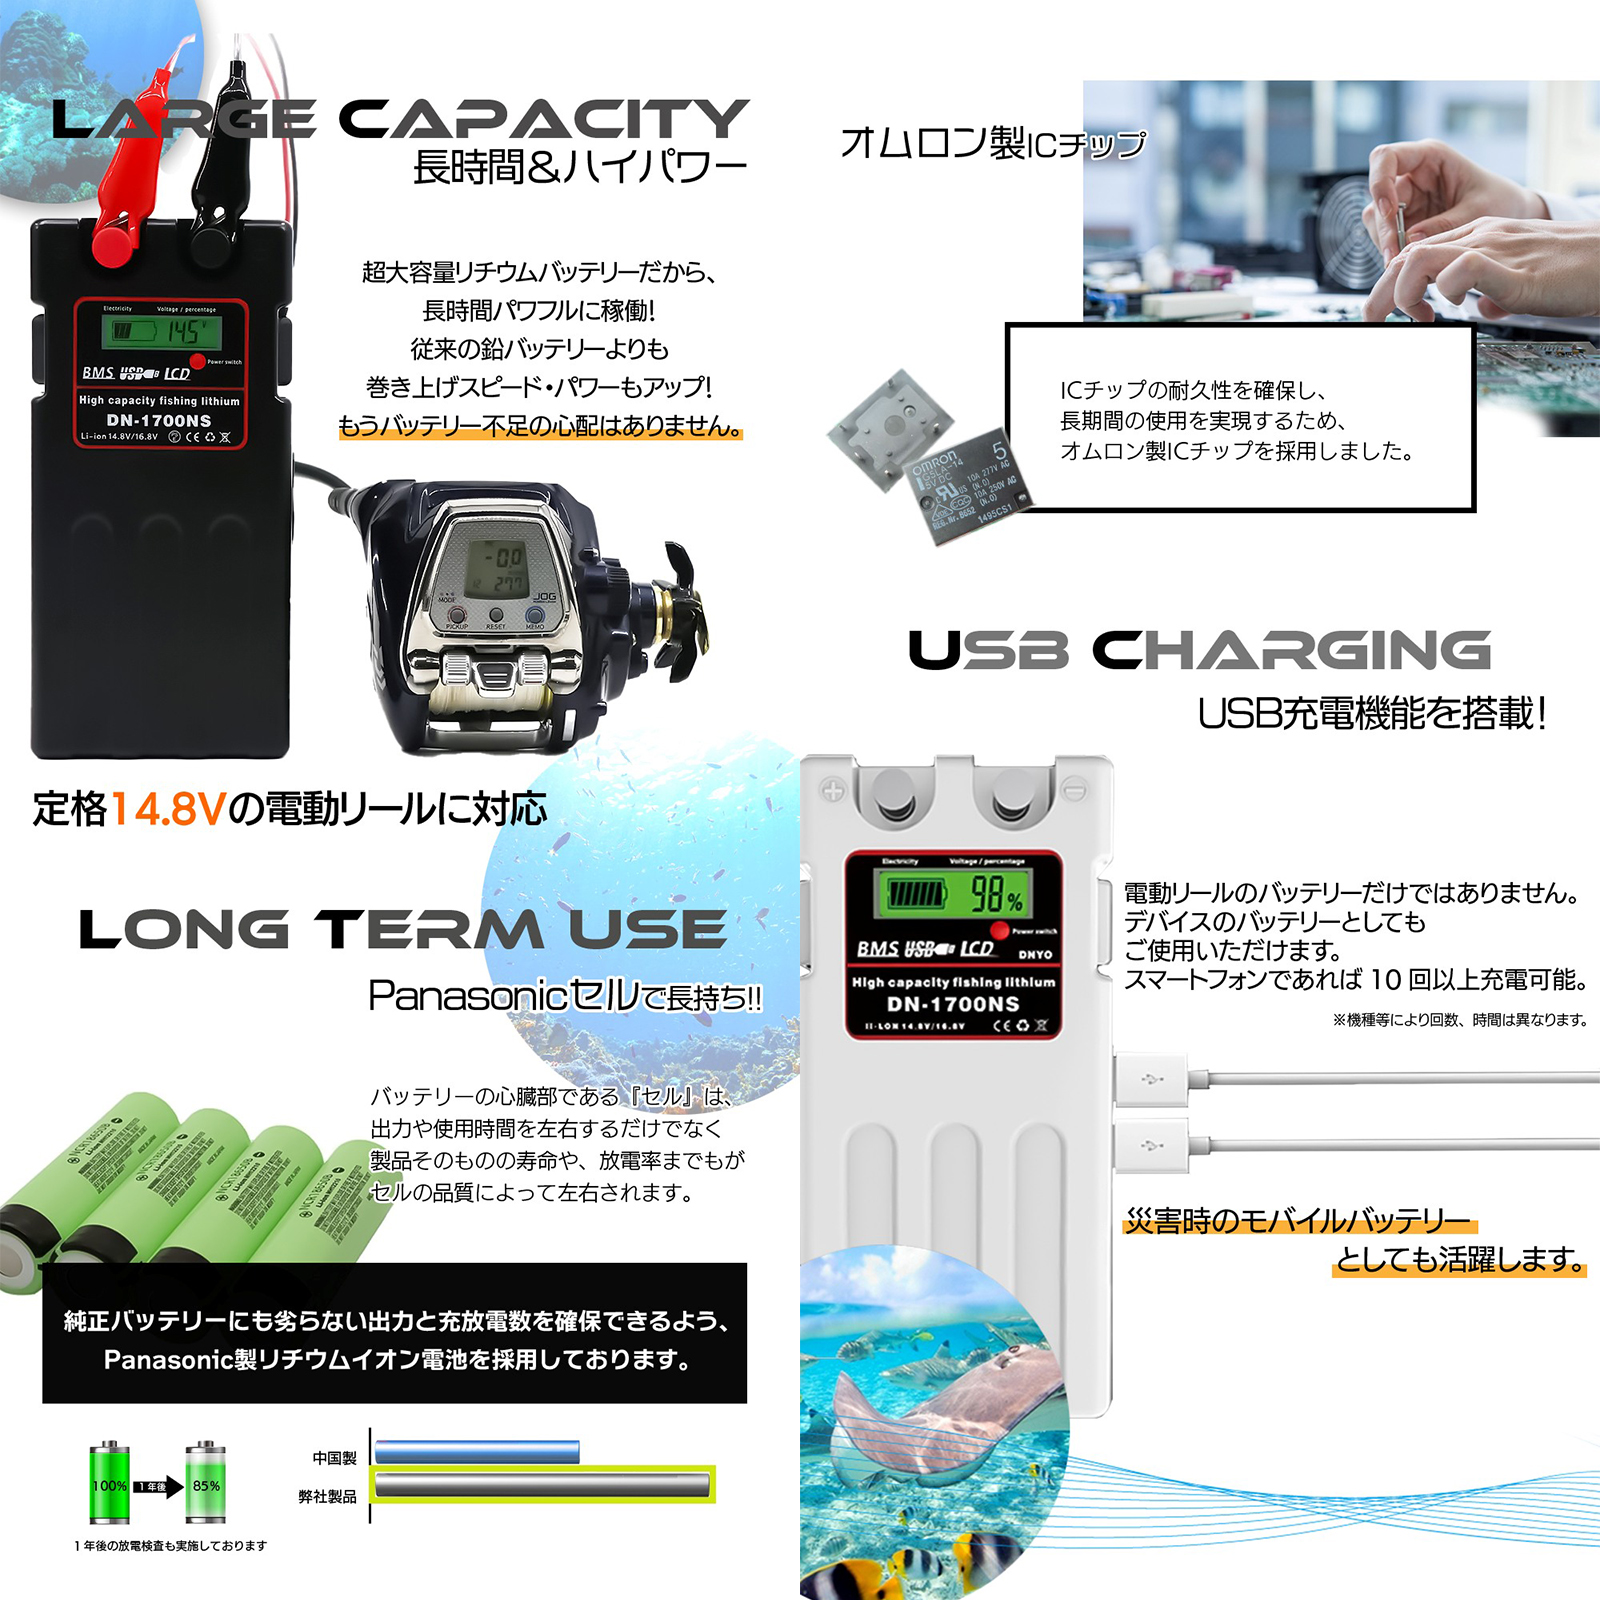  Daiwa Shimano electric reel for super lithium battery cover set 14.8V high capacity 10400mAh Panasonic cell built-in 